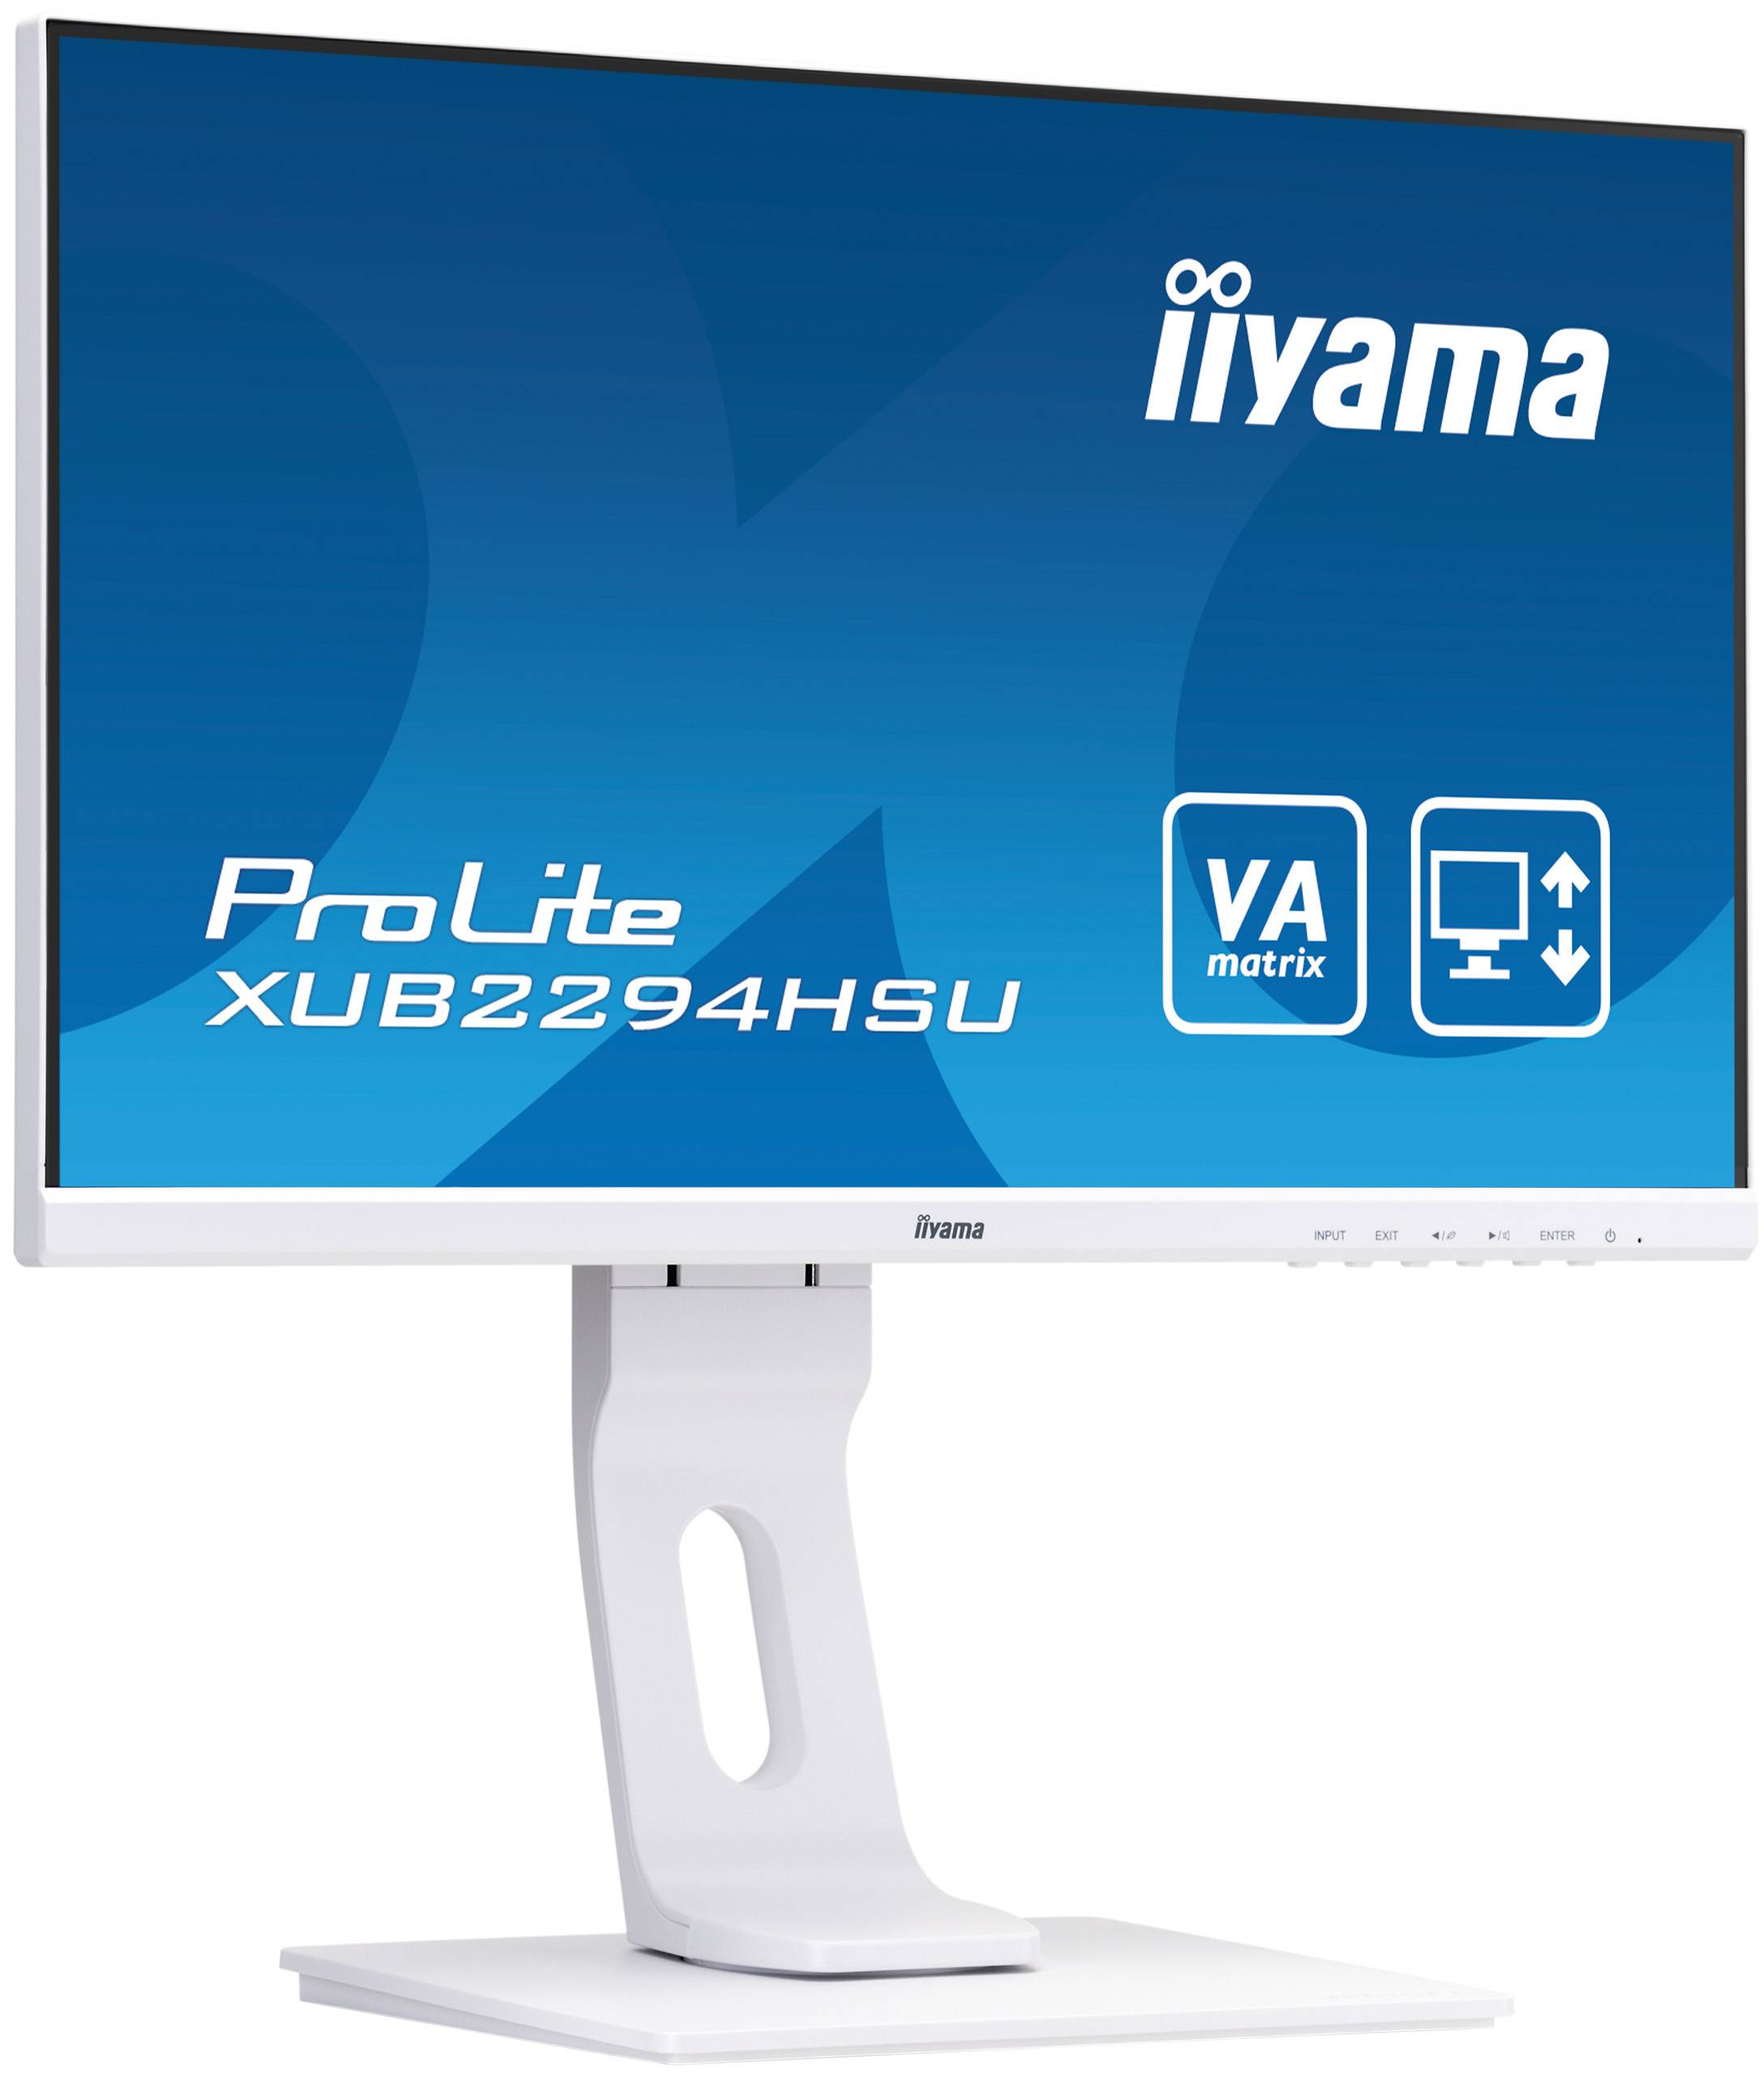 Rca Informatique - image du produit : XUB2294HSU-W1 3000:1 VGA HDMI 215IN LCD 1920 X 1080 16:9 4MS